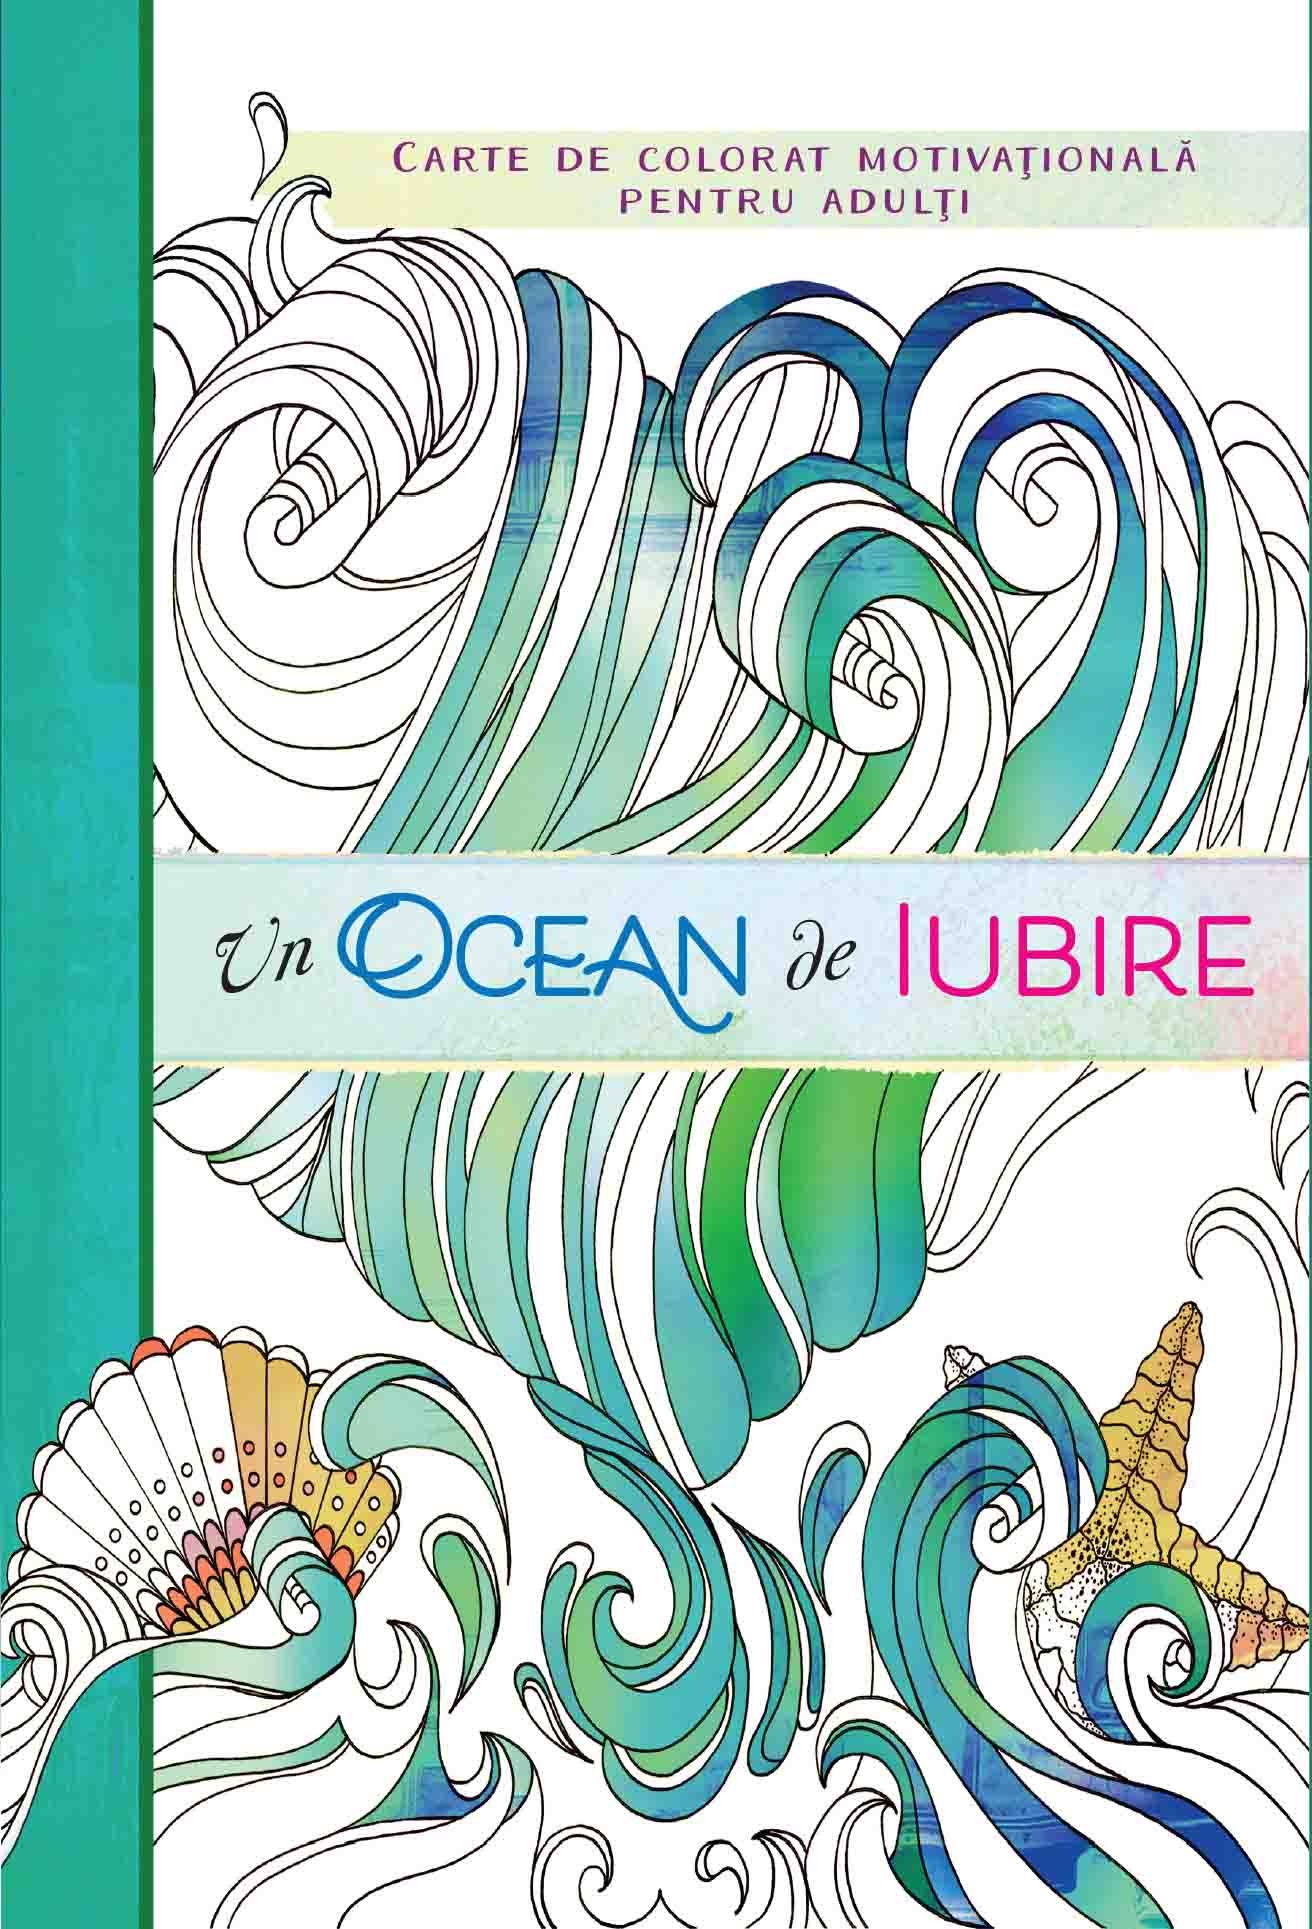 Un ocean de iubire | carte